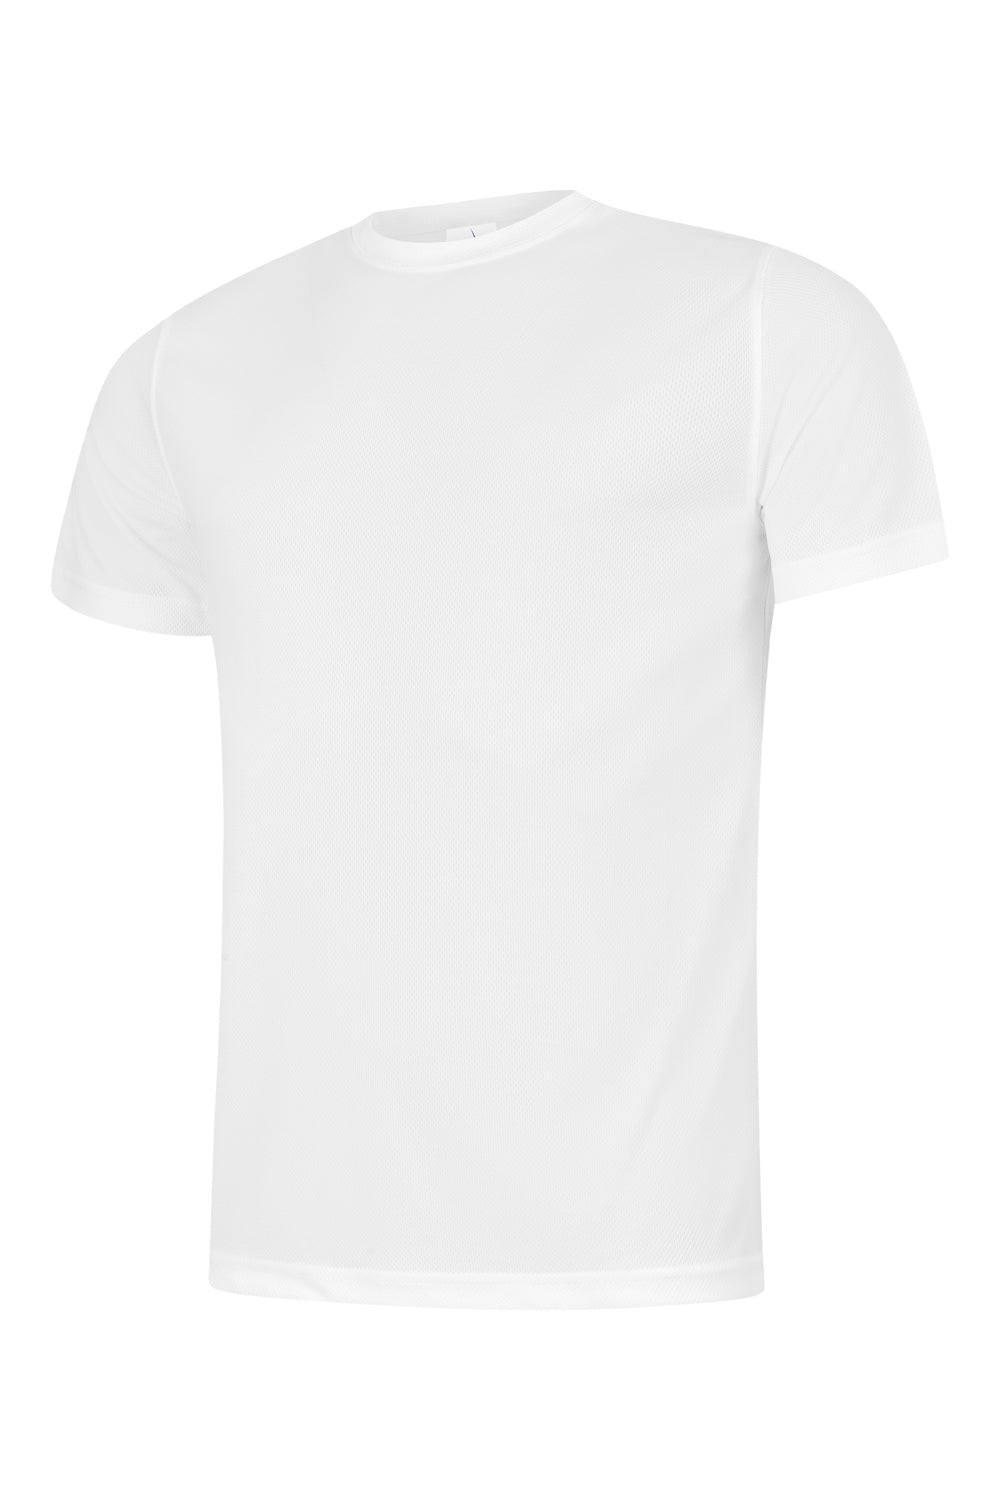 Uneek Mens Ultra Cool T Shirt UC315 - White